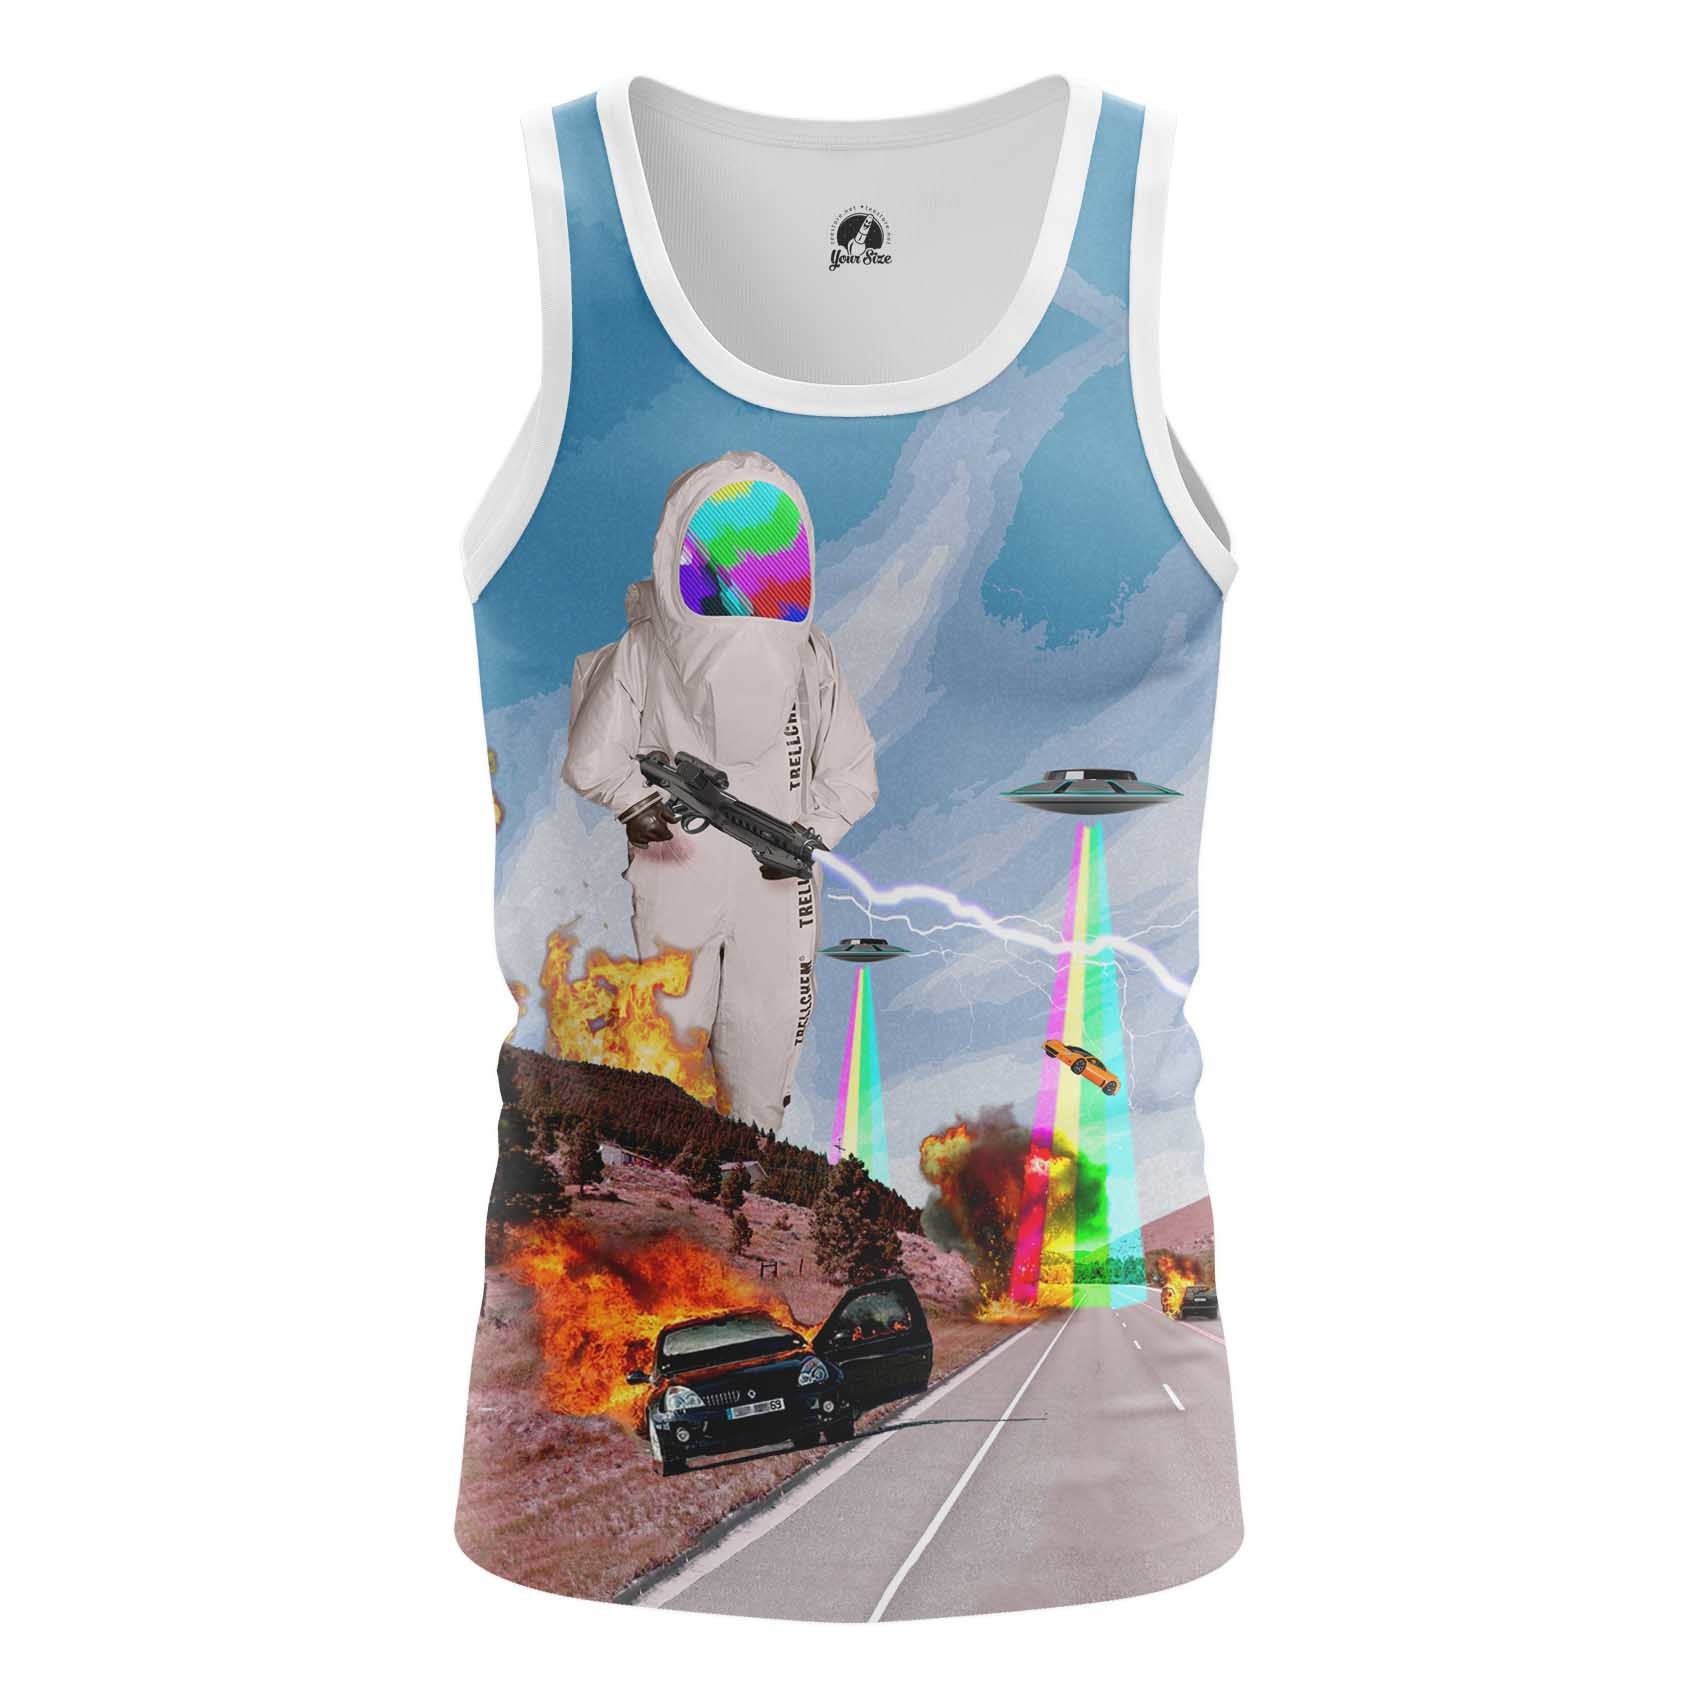 Merchandise Men'S T-Shirt Biohazard Internet Costumes Rainbow